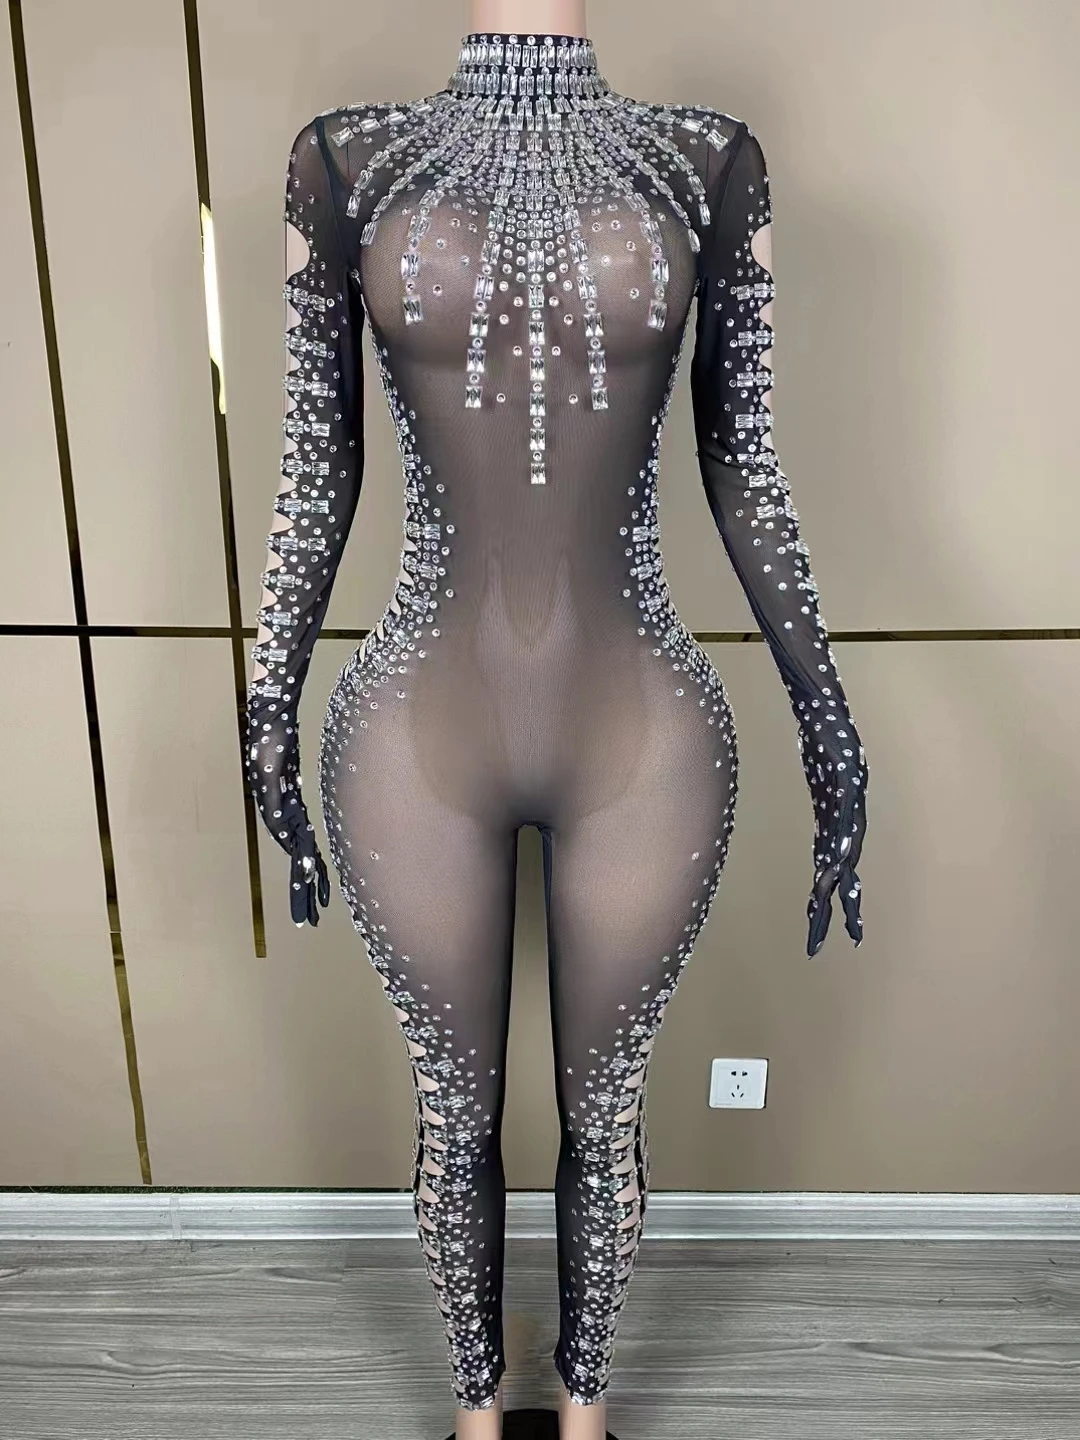 

New Designed Big Pearls Rhinestones Stretchransparentjumpsuit Evening BirthdayCelebrate Outfit Sexy Dancer Bodysuit